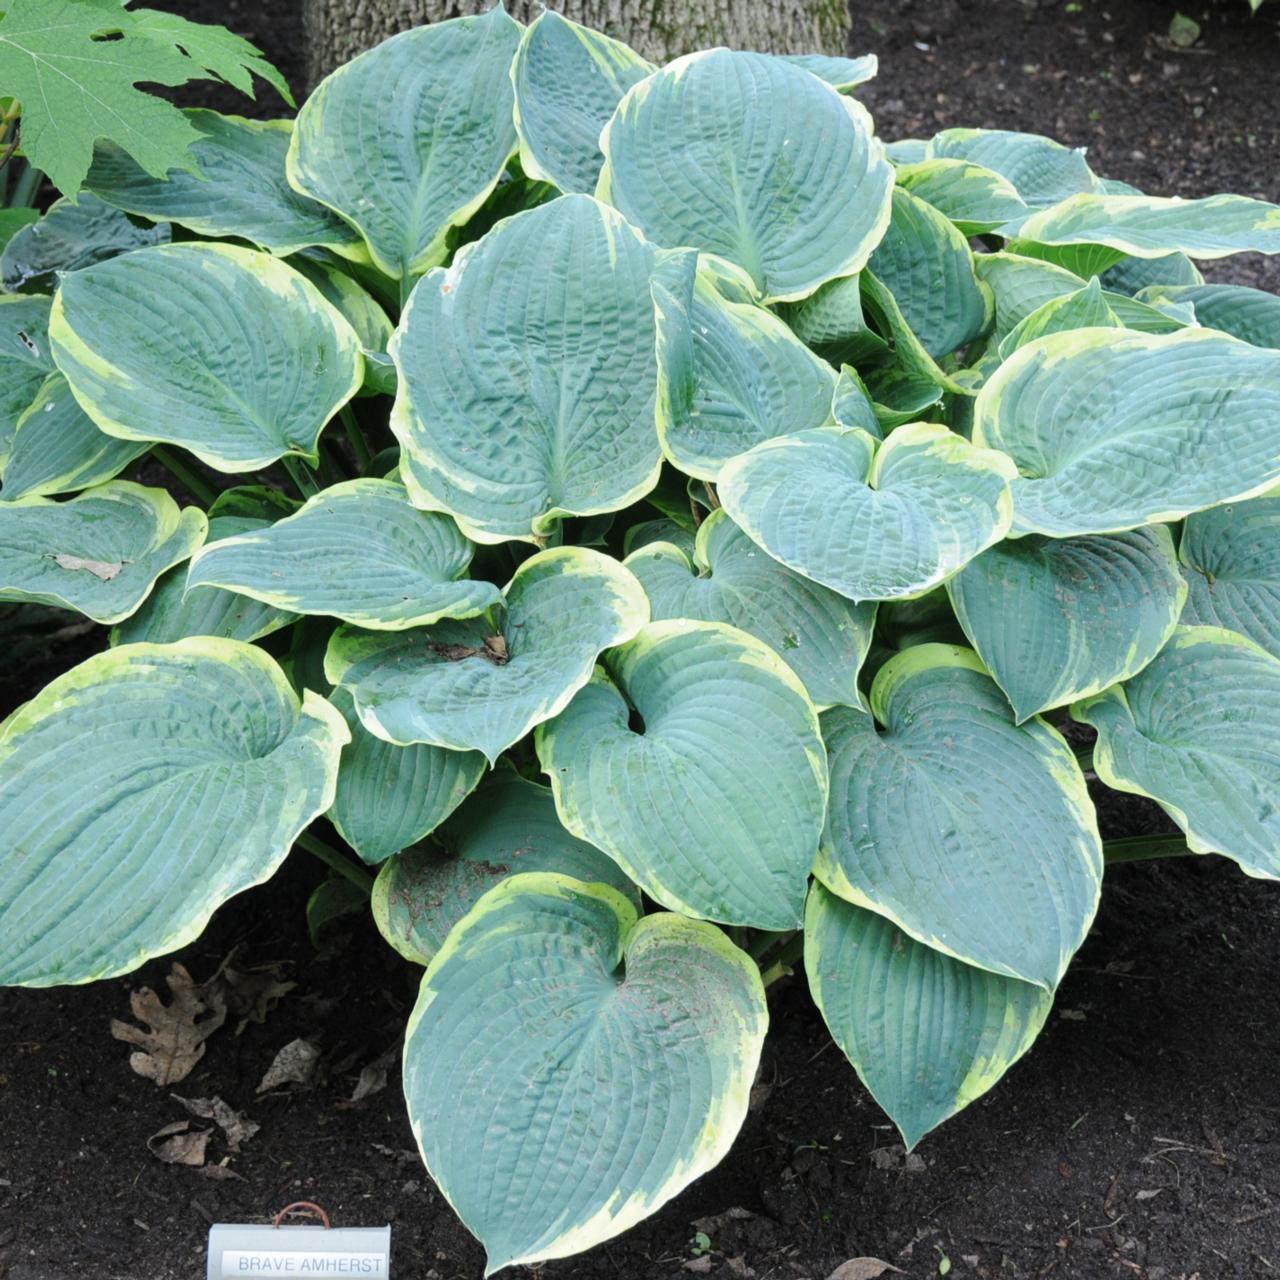 Hosta 'Brave Amherst' plant